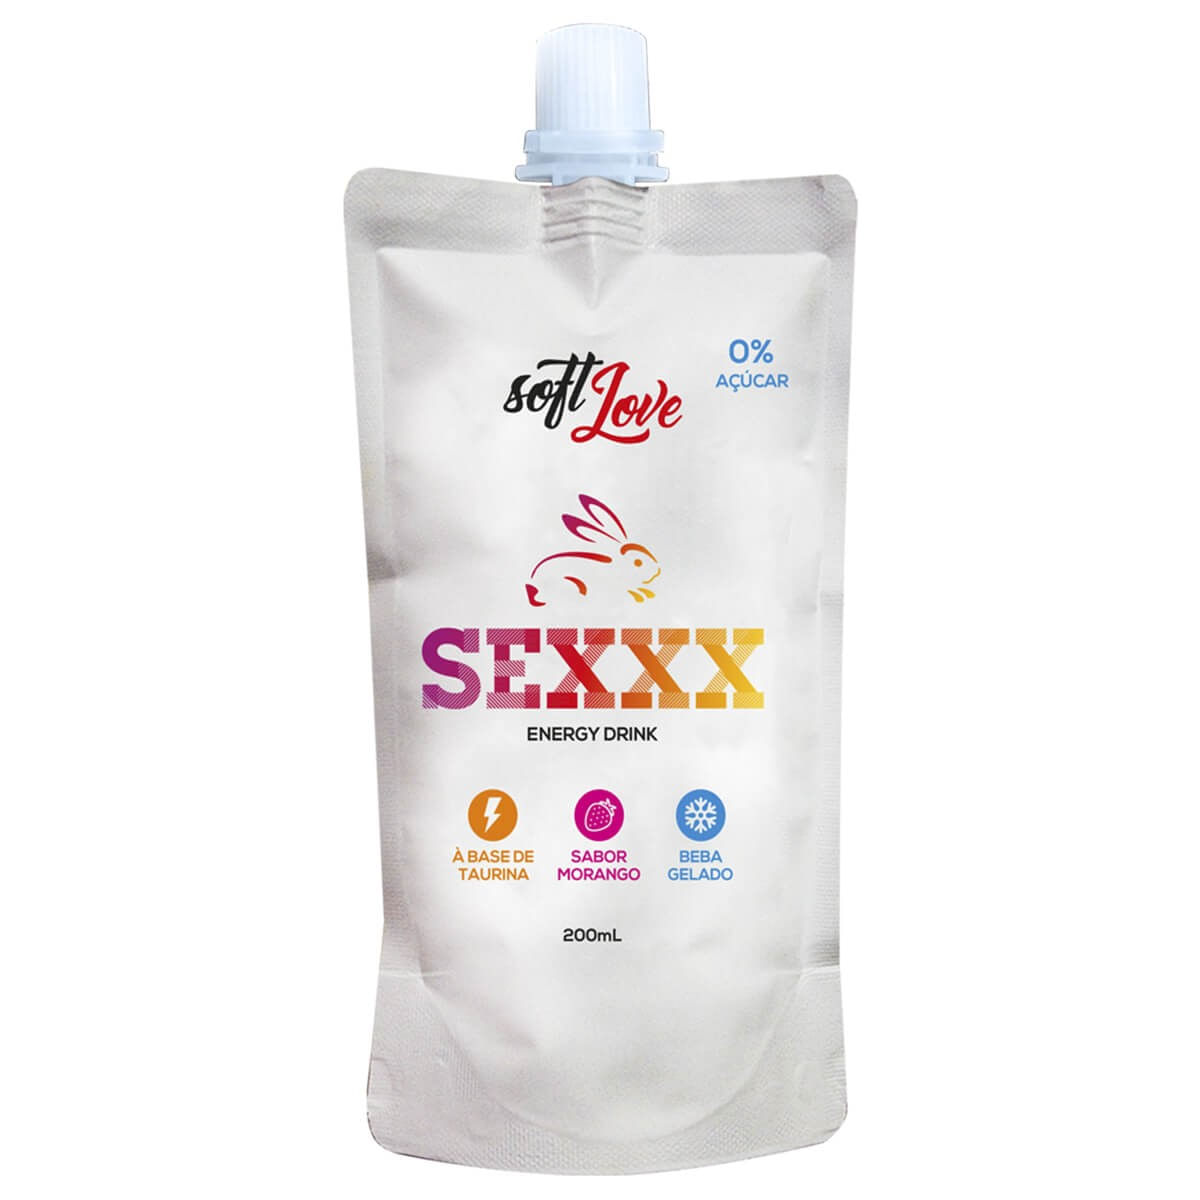 SEXXX Energy Drink Morango Soft Love